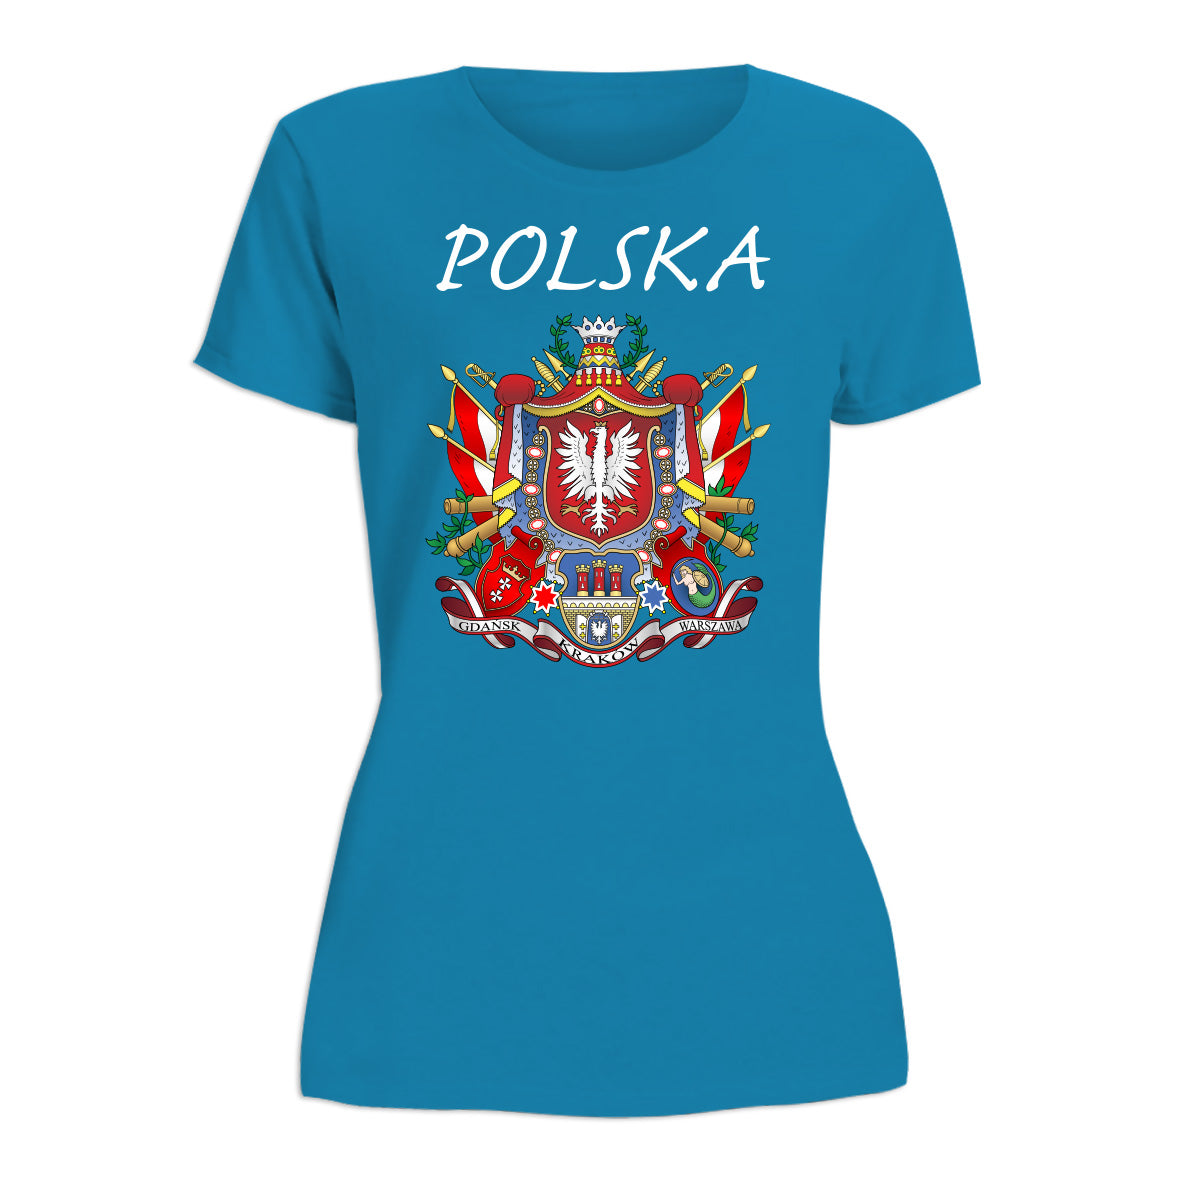 Polska With Three Cities Women's Short Sleeve Tshirt